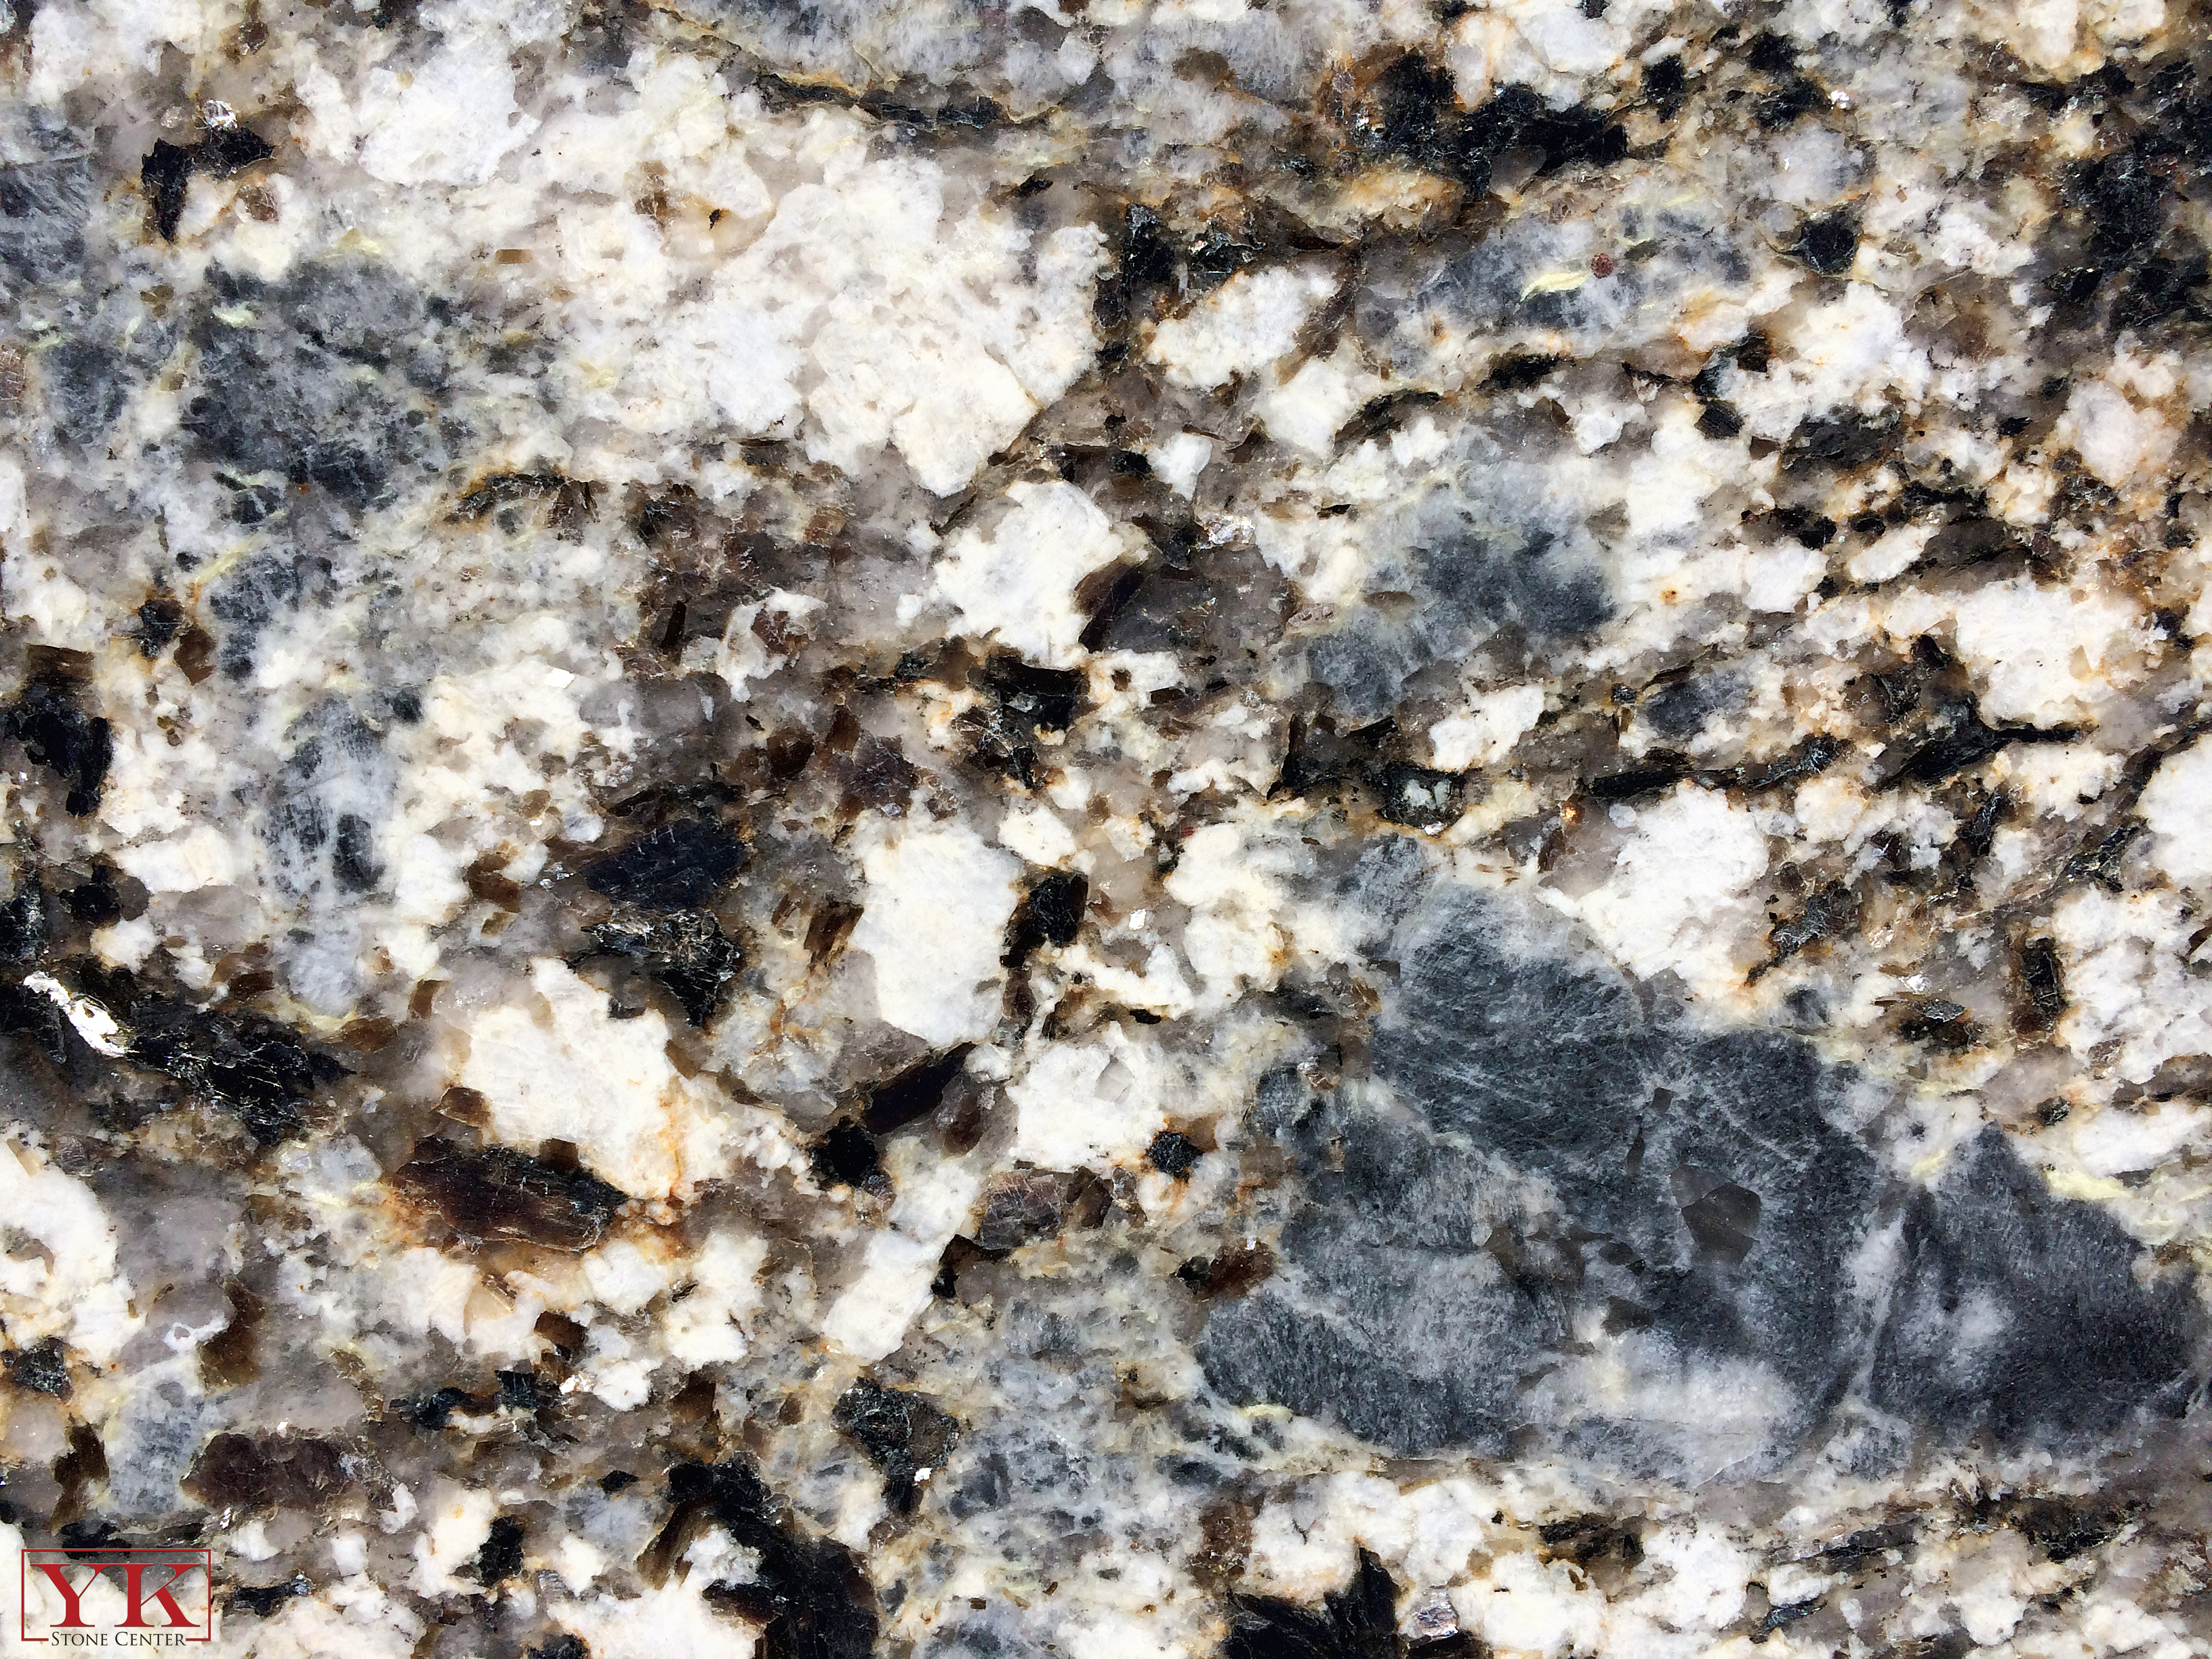 Blue Flower Granite Close up, Minerals in granite stone, YK Stone center in denver